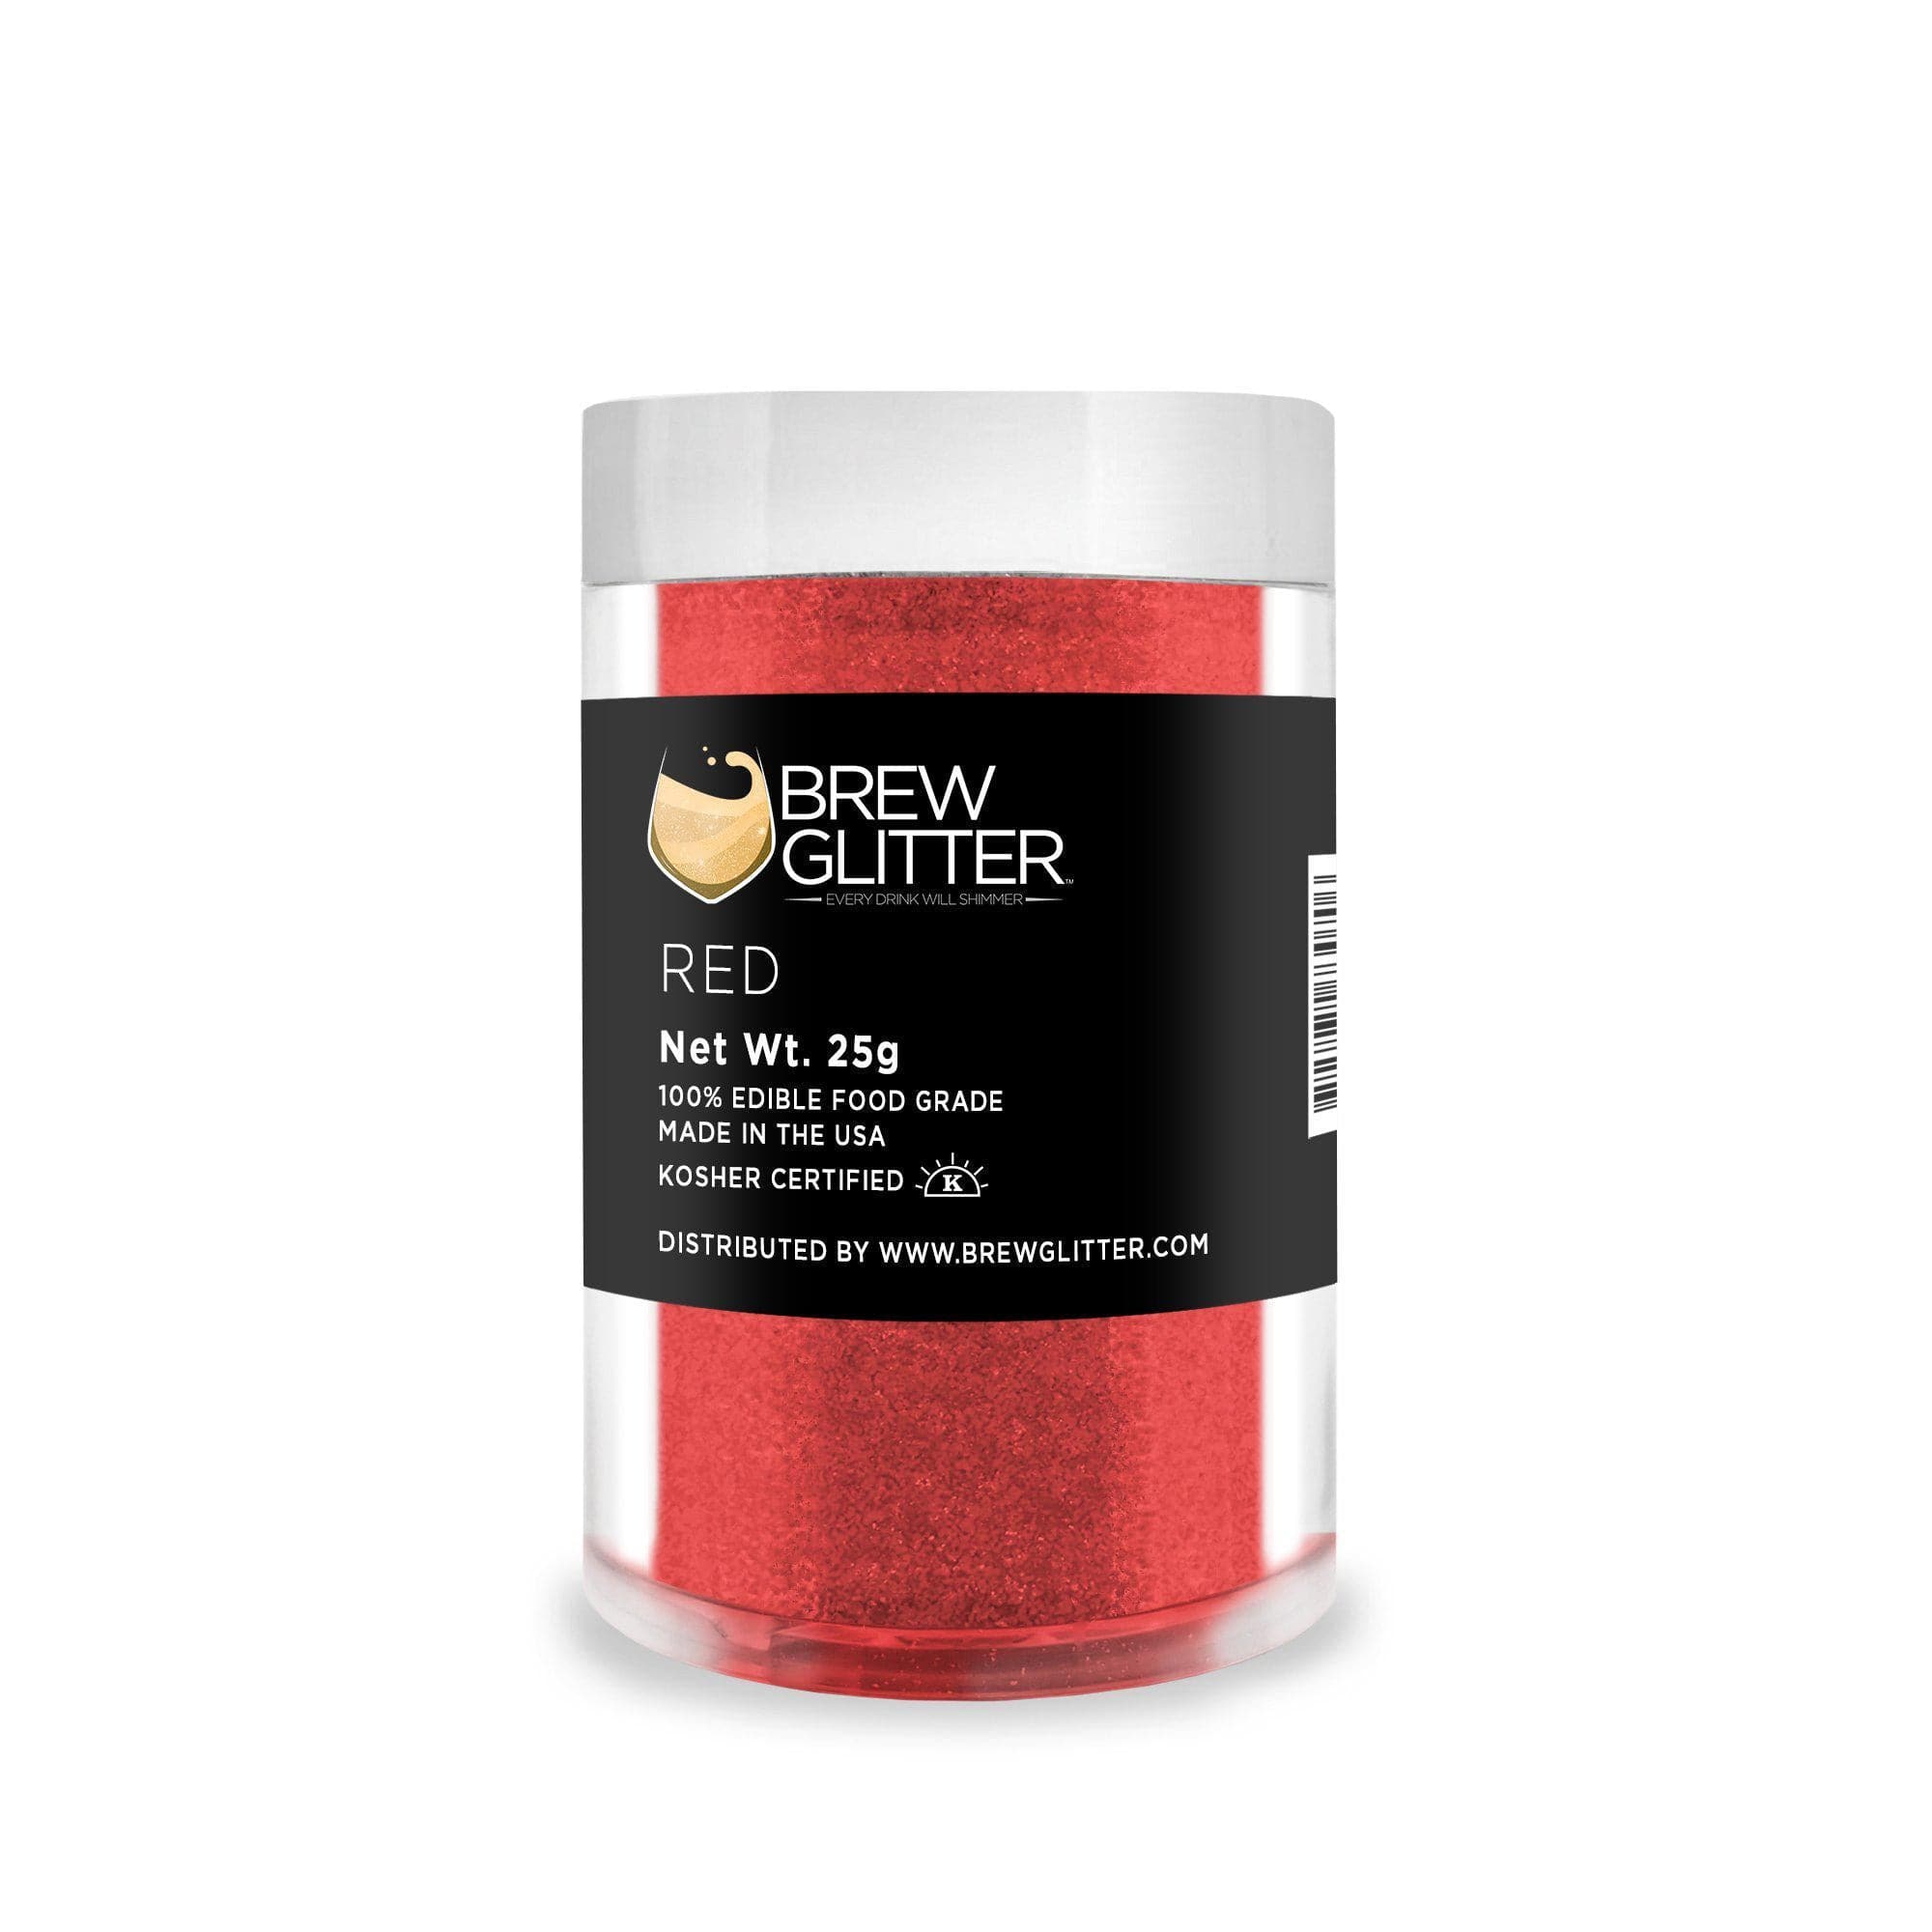 Red Beverage Glitter | Fun Edible Glitter | Bakell